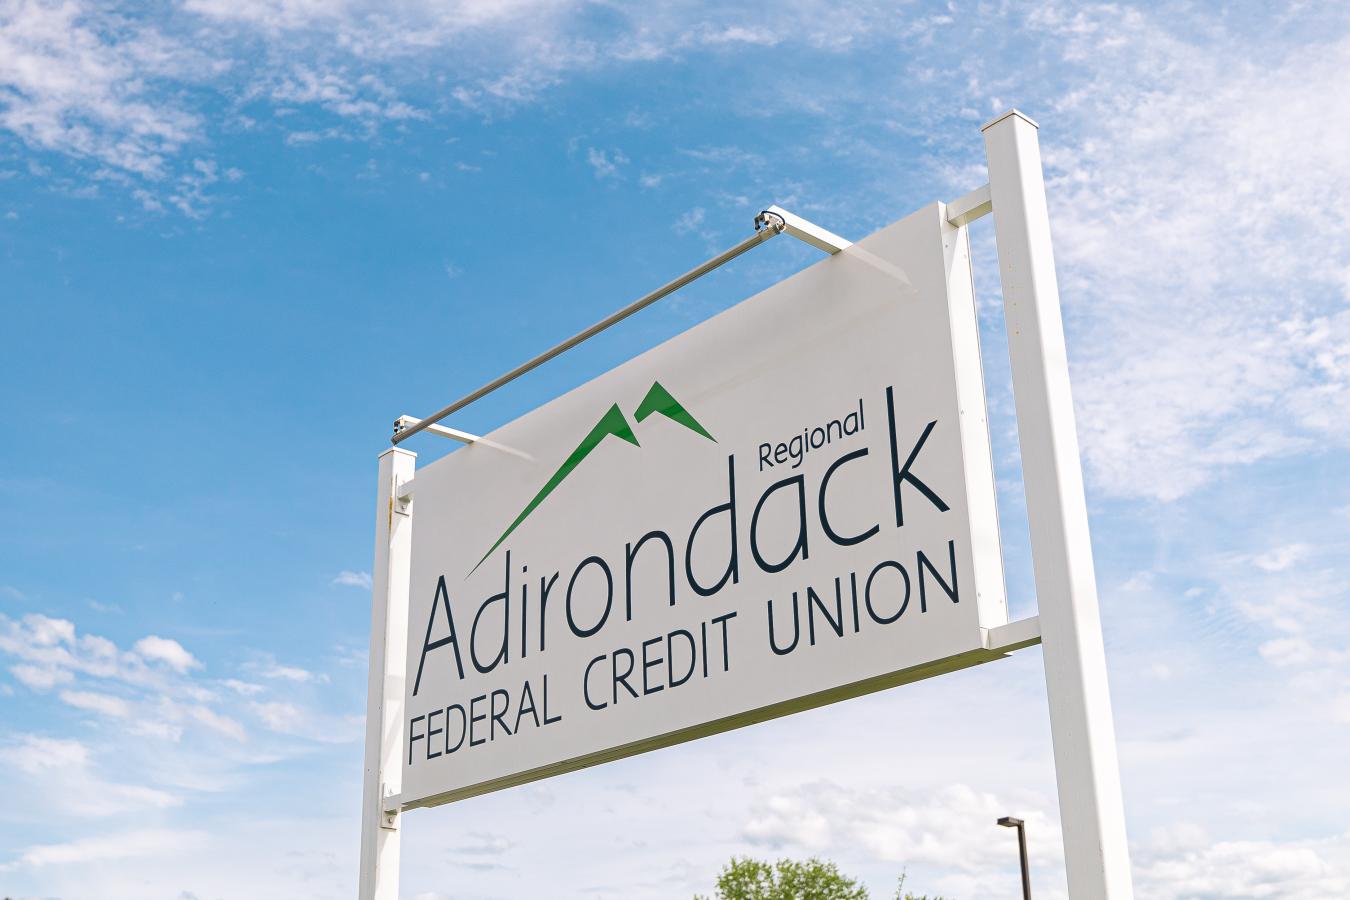 Adirondack Regional Federal Credit Union road sign